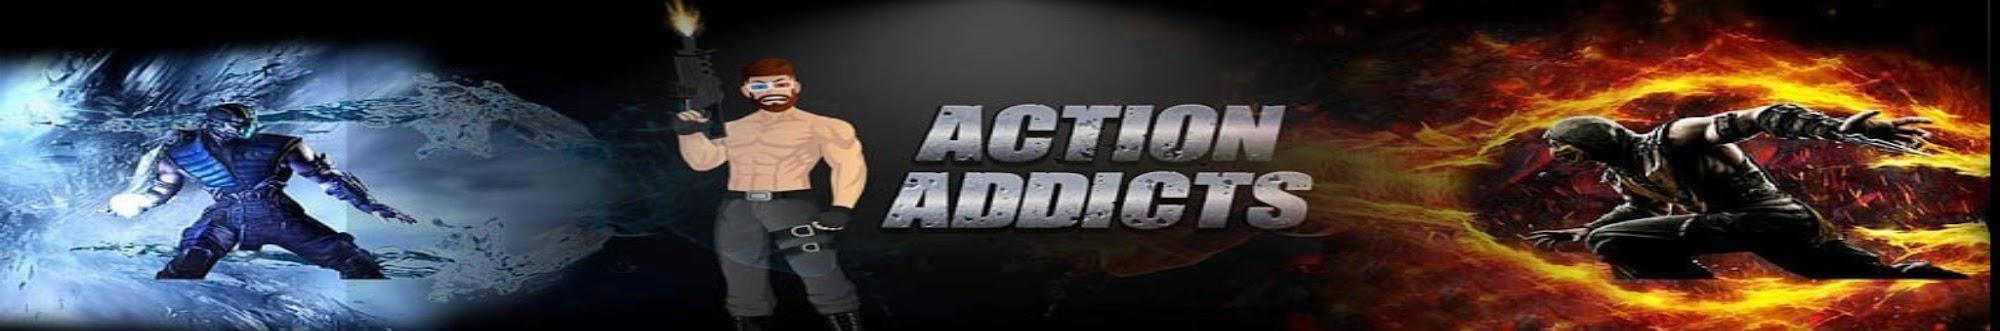 Action_Addicts